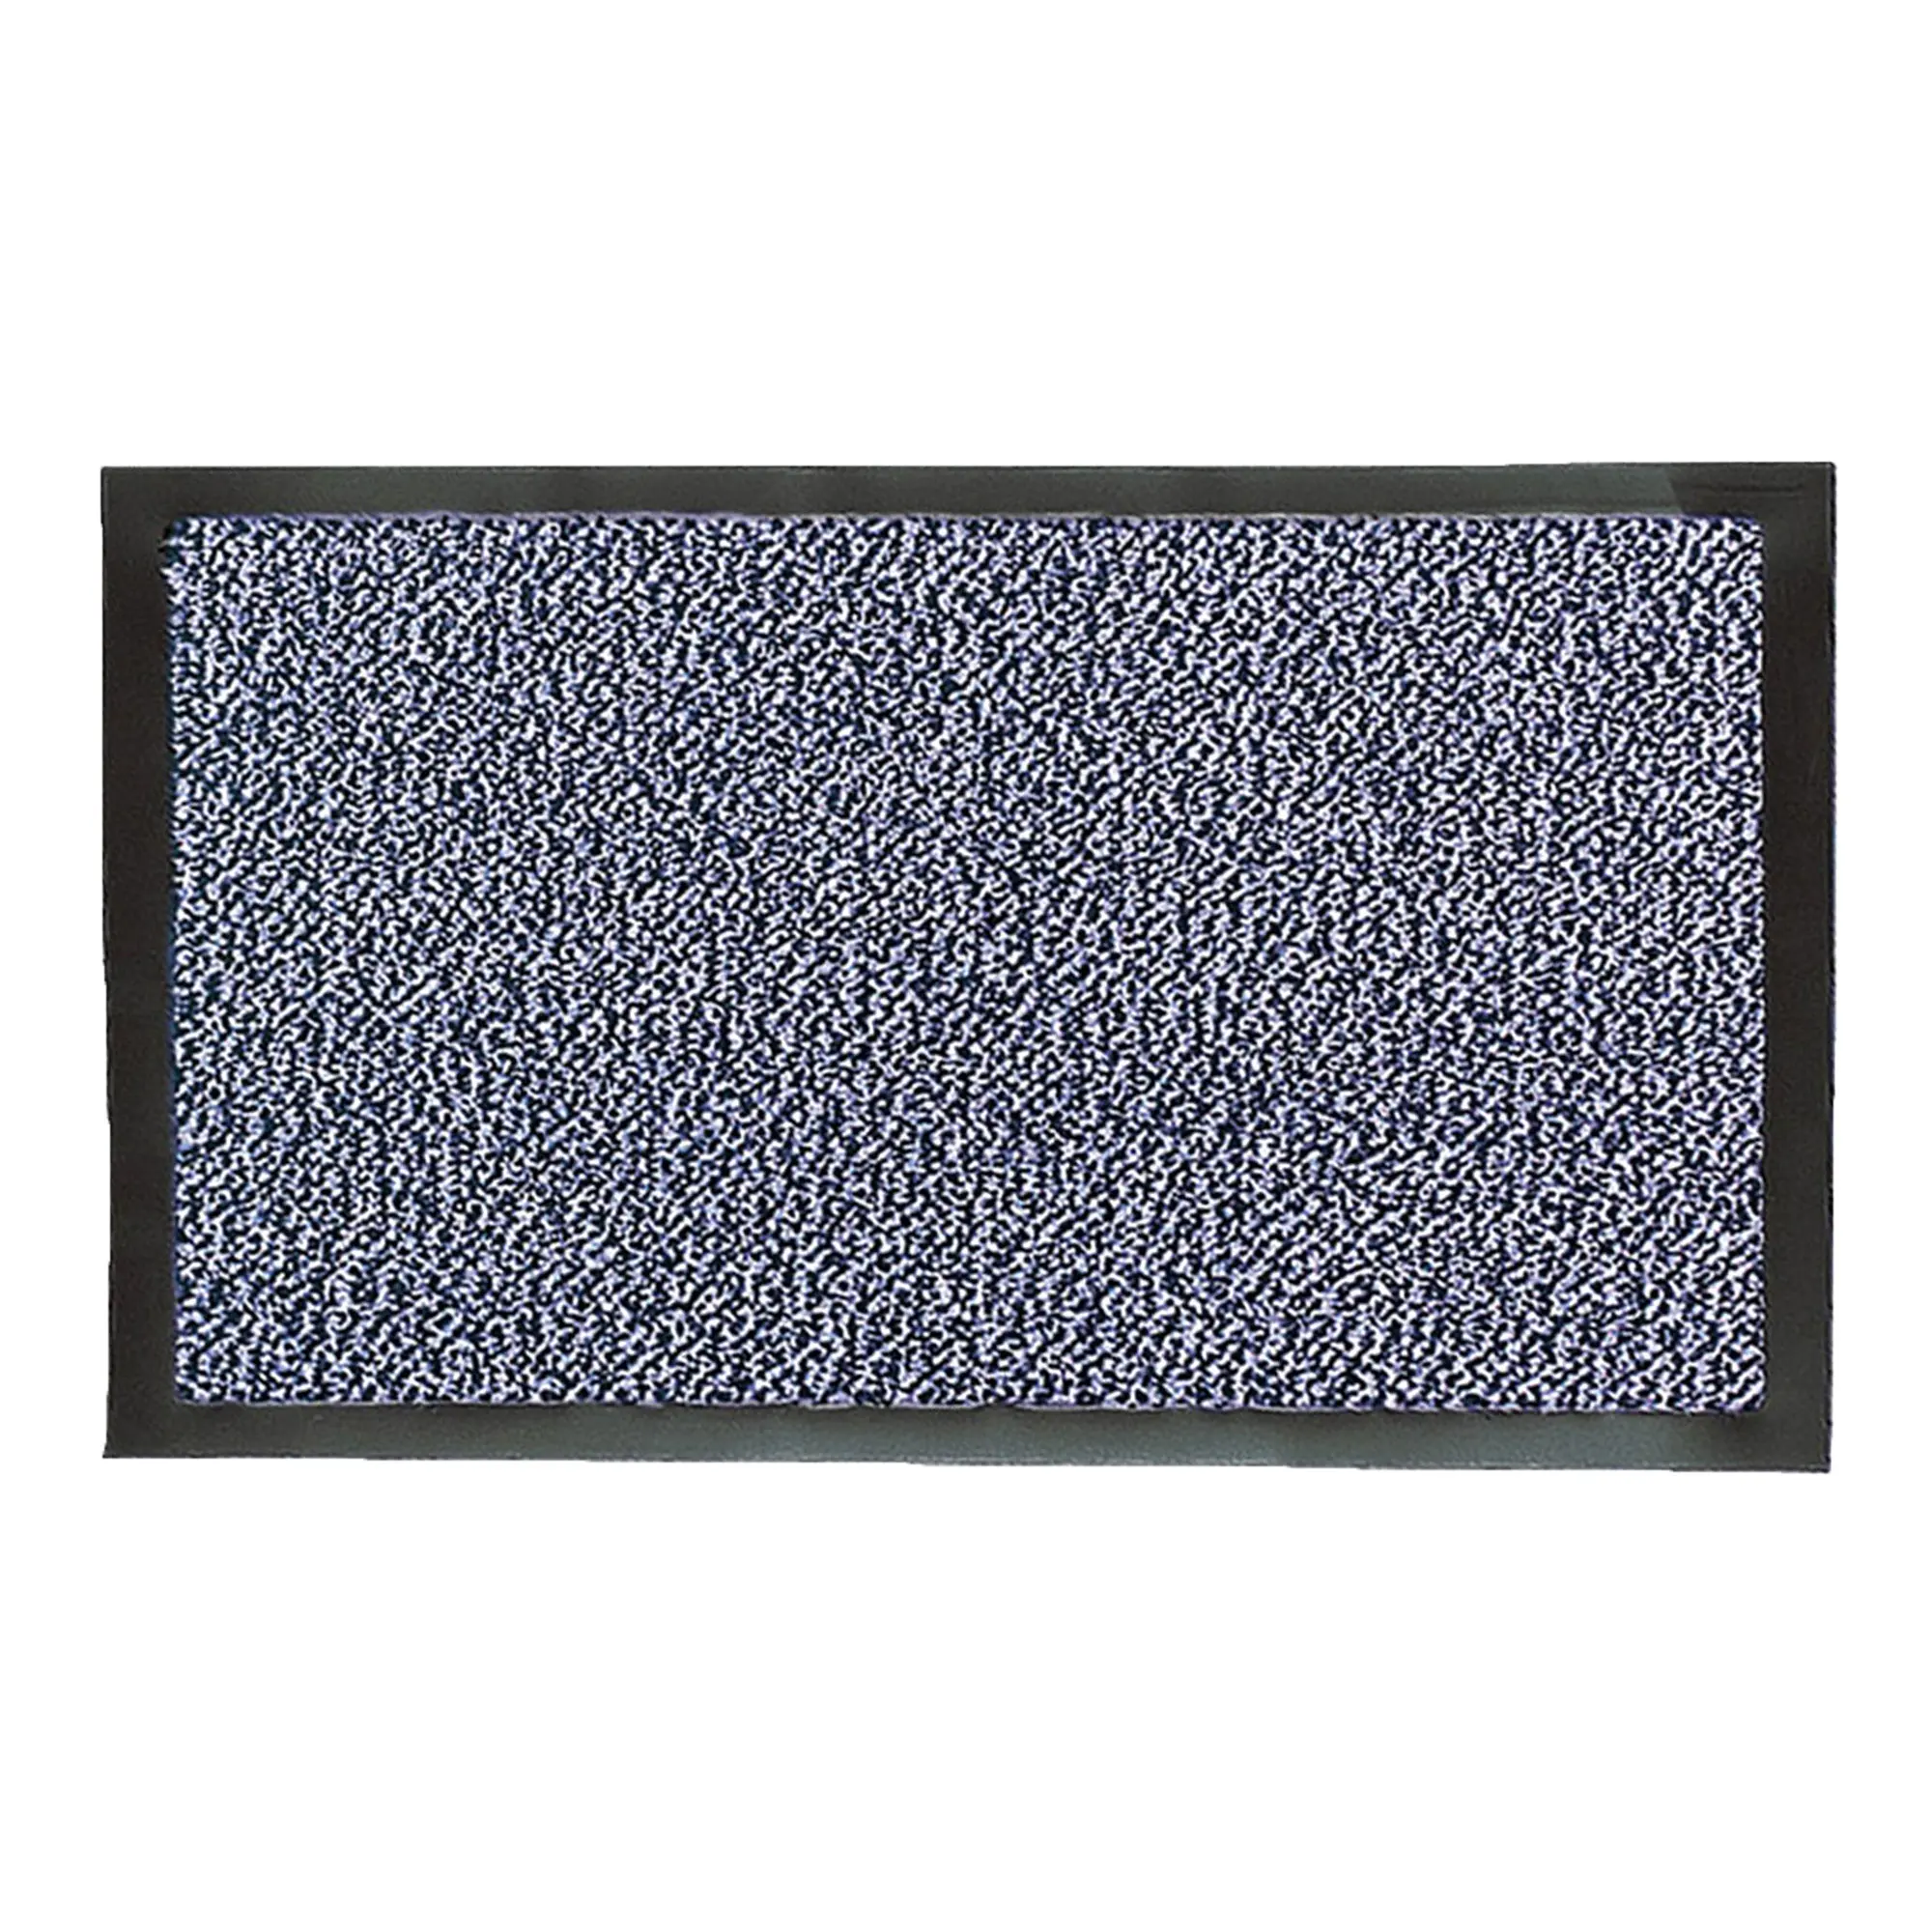 Nölle Schmutzfangmatte 60 x 90 cm blau 795105_1